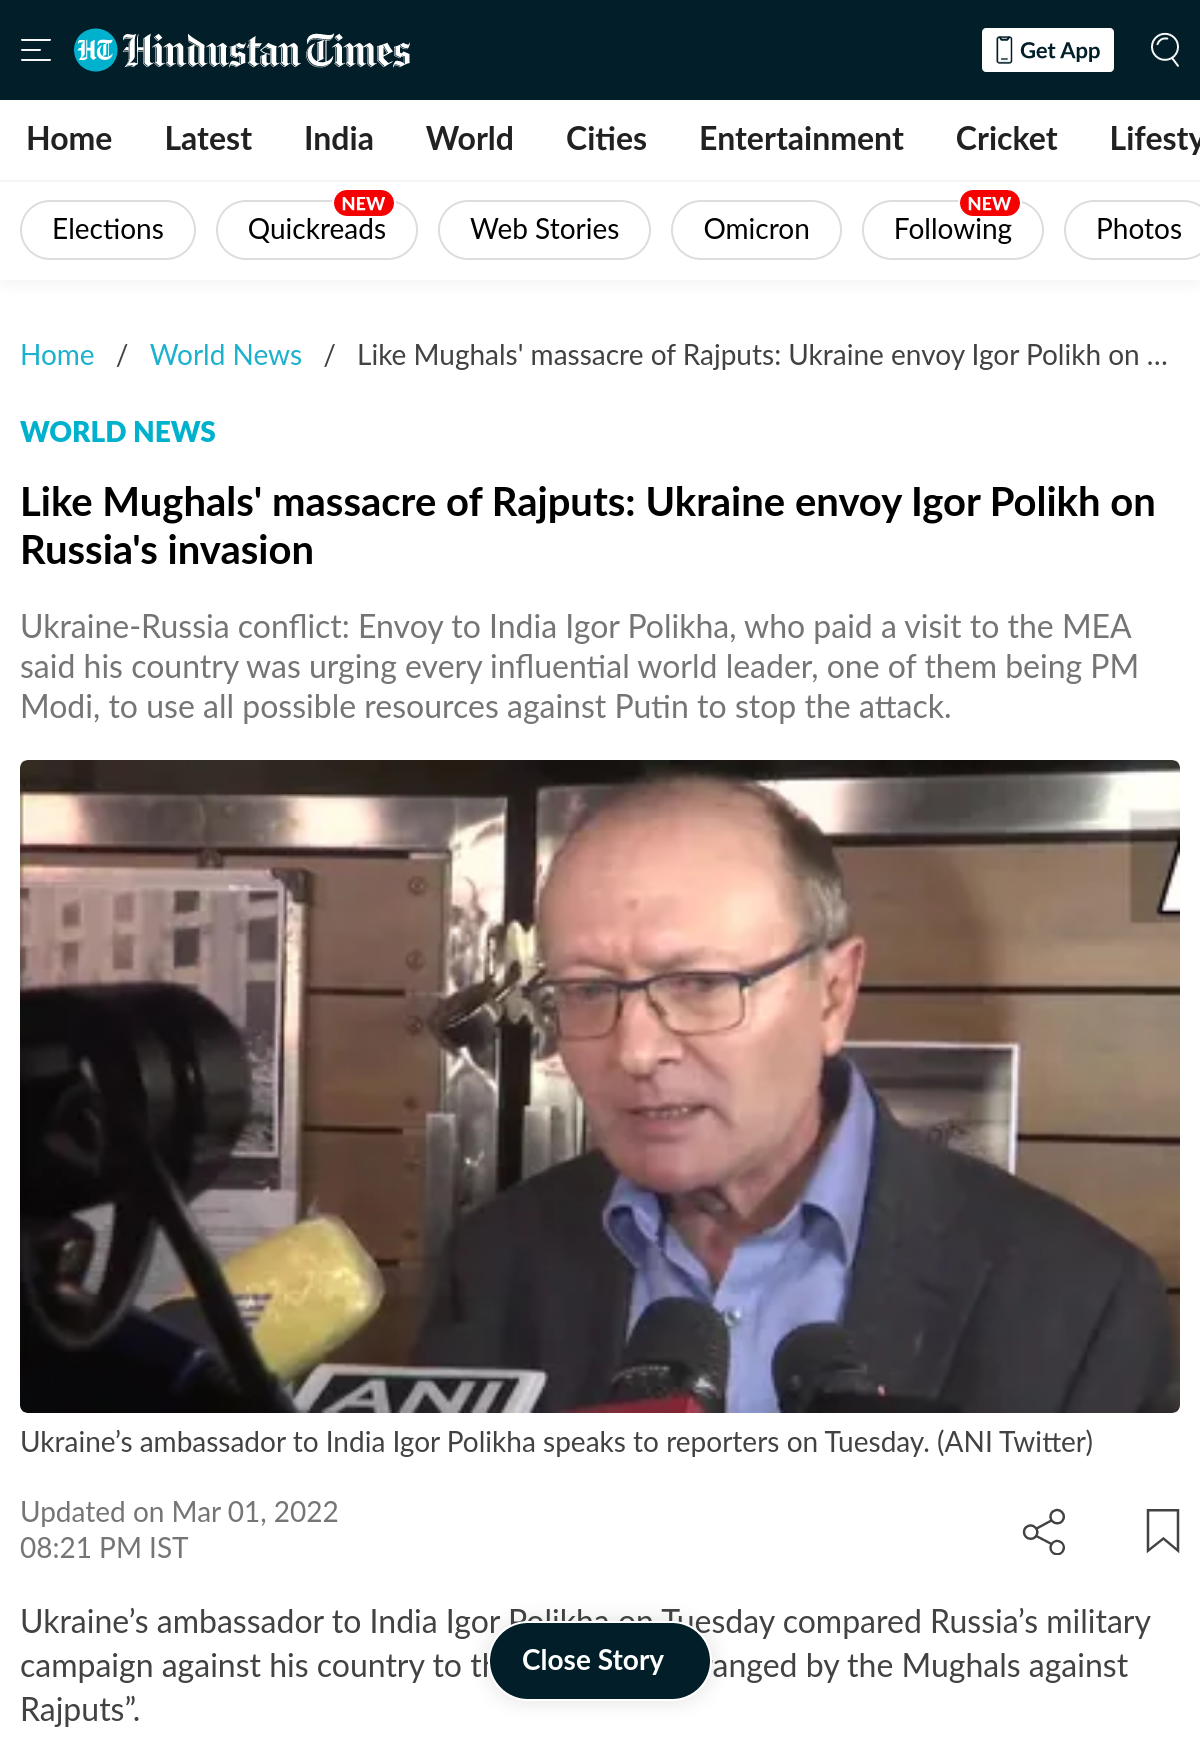 Hindustan Times - Ukraine envoy compares Russian Invasion to Mughals massacre of Rajputs